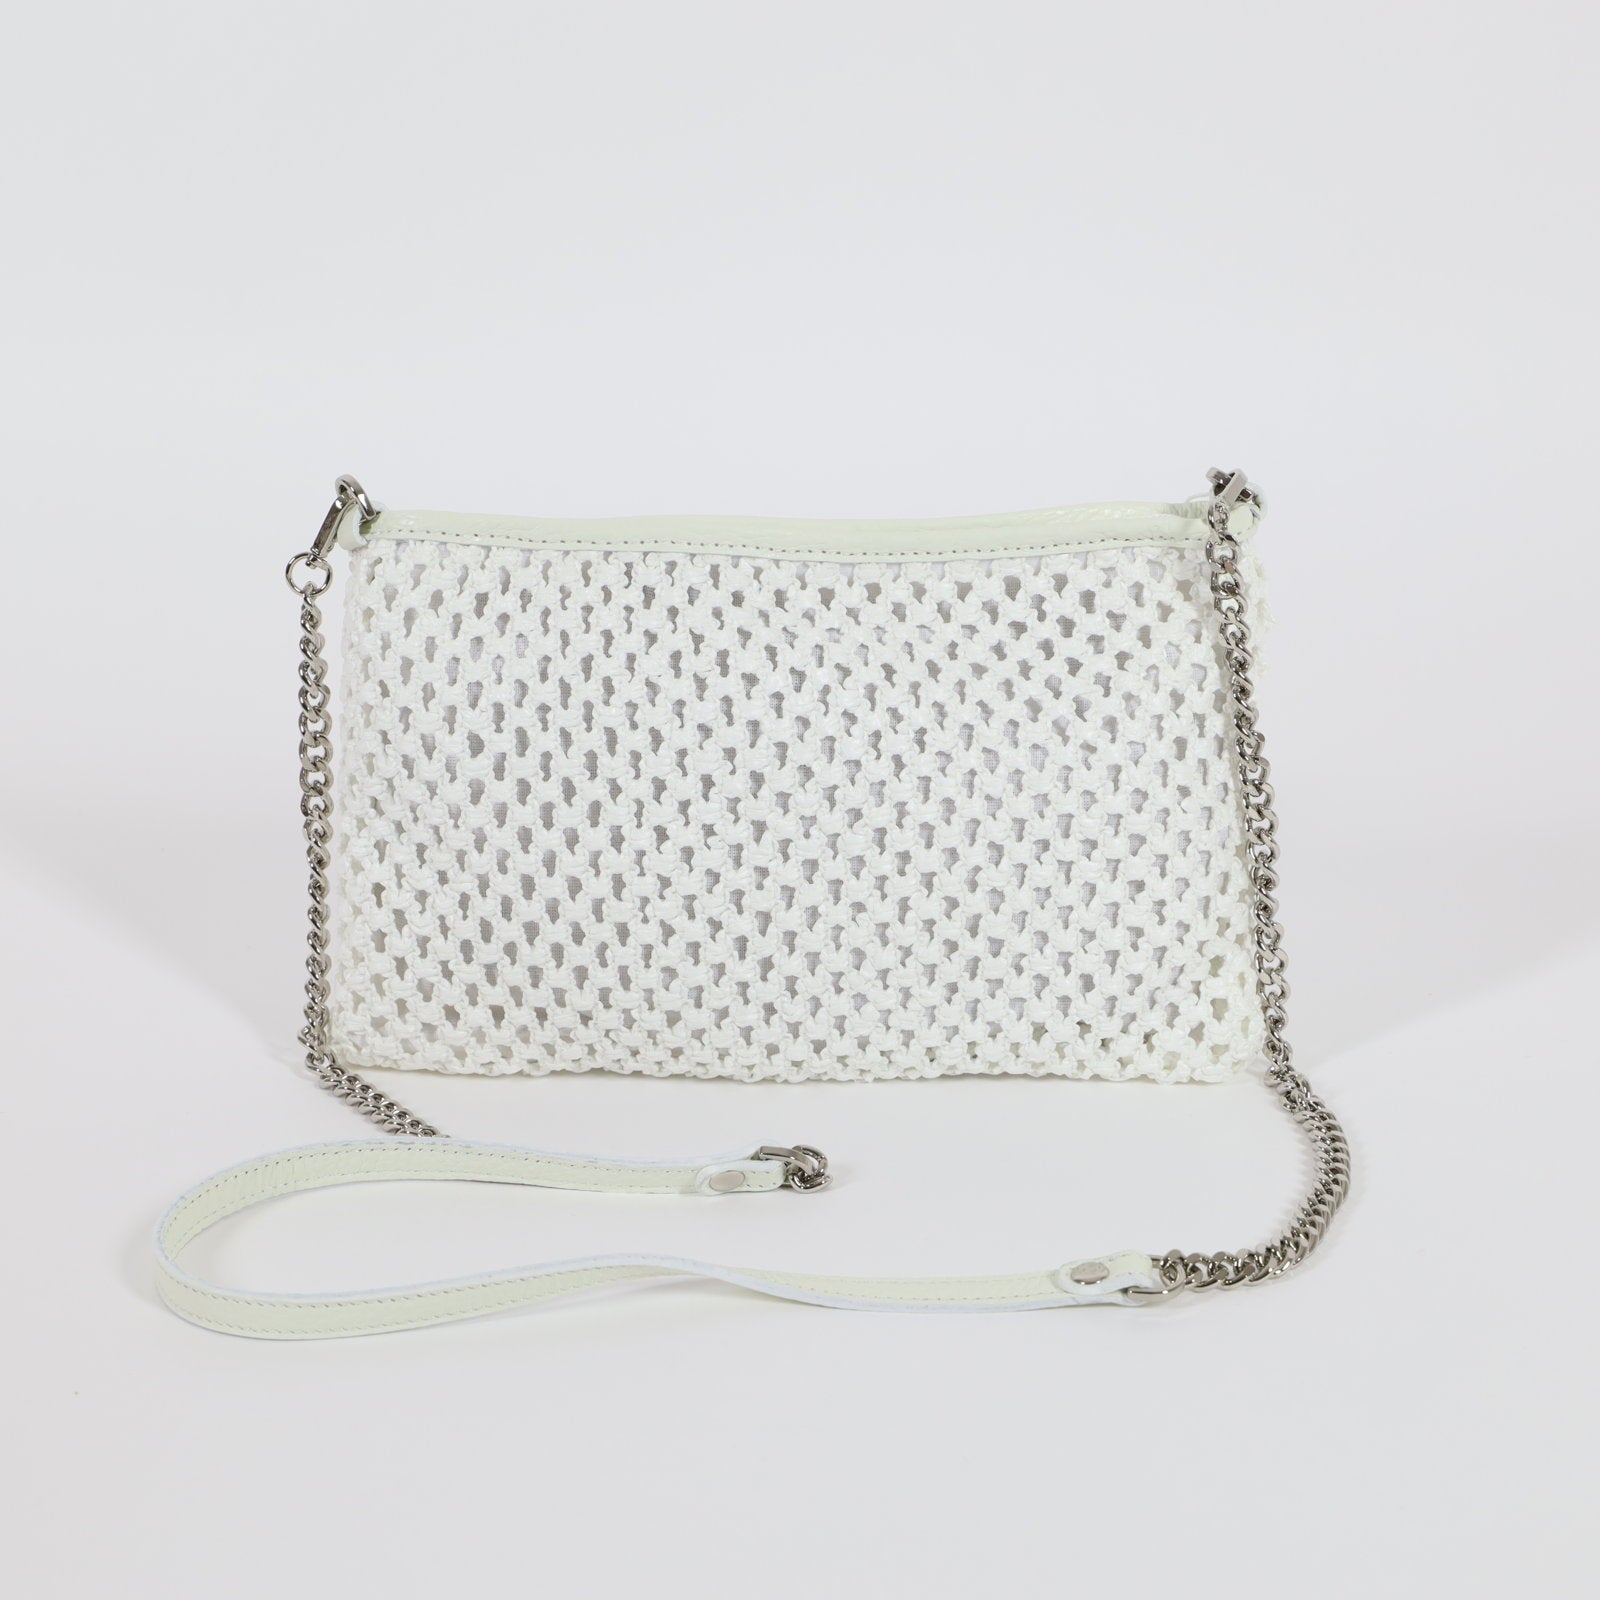 ALMA TONUTTI white and silver cloth woven handbag